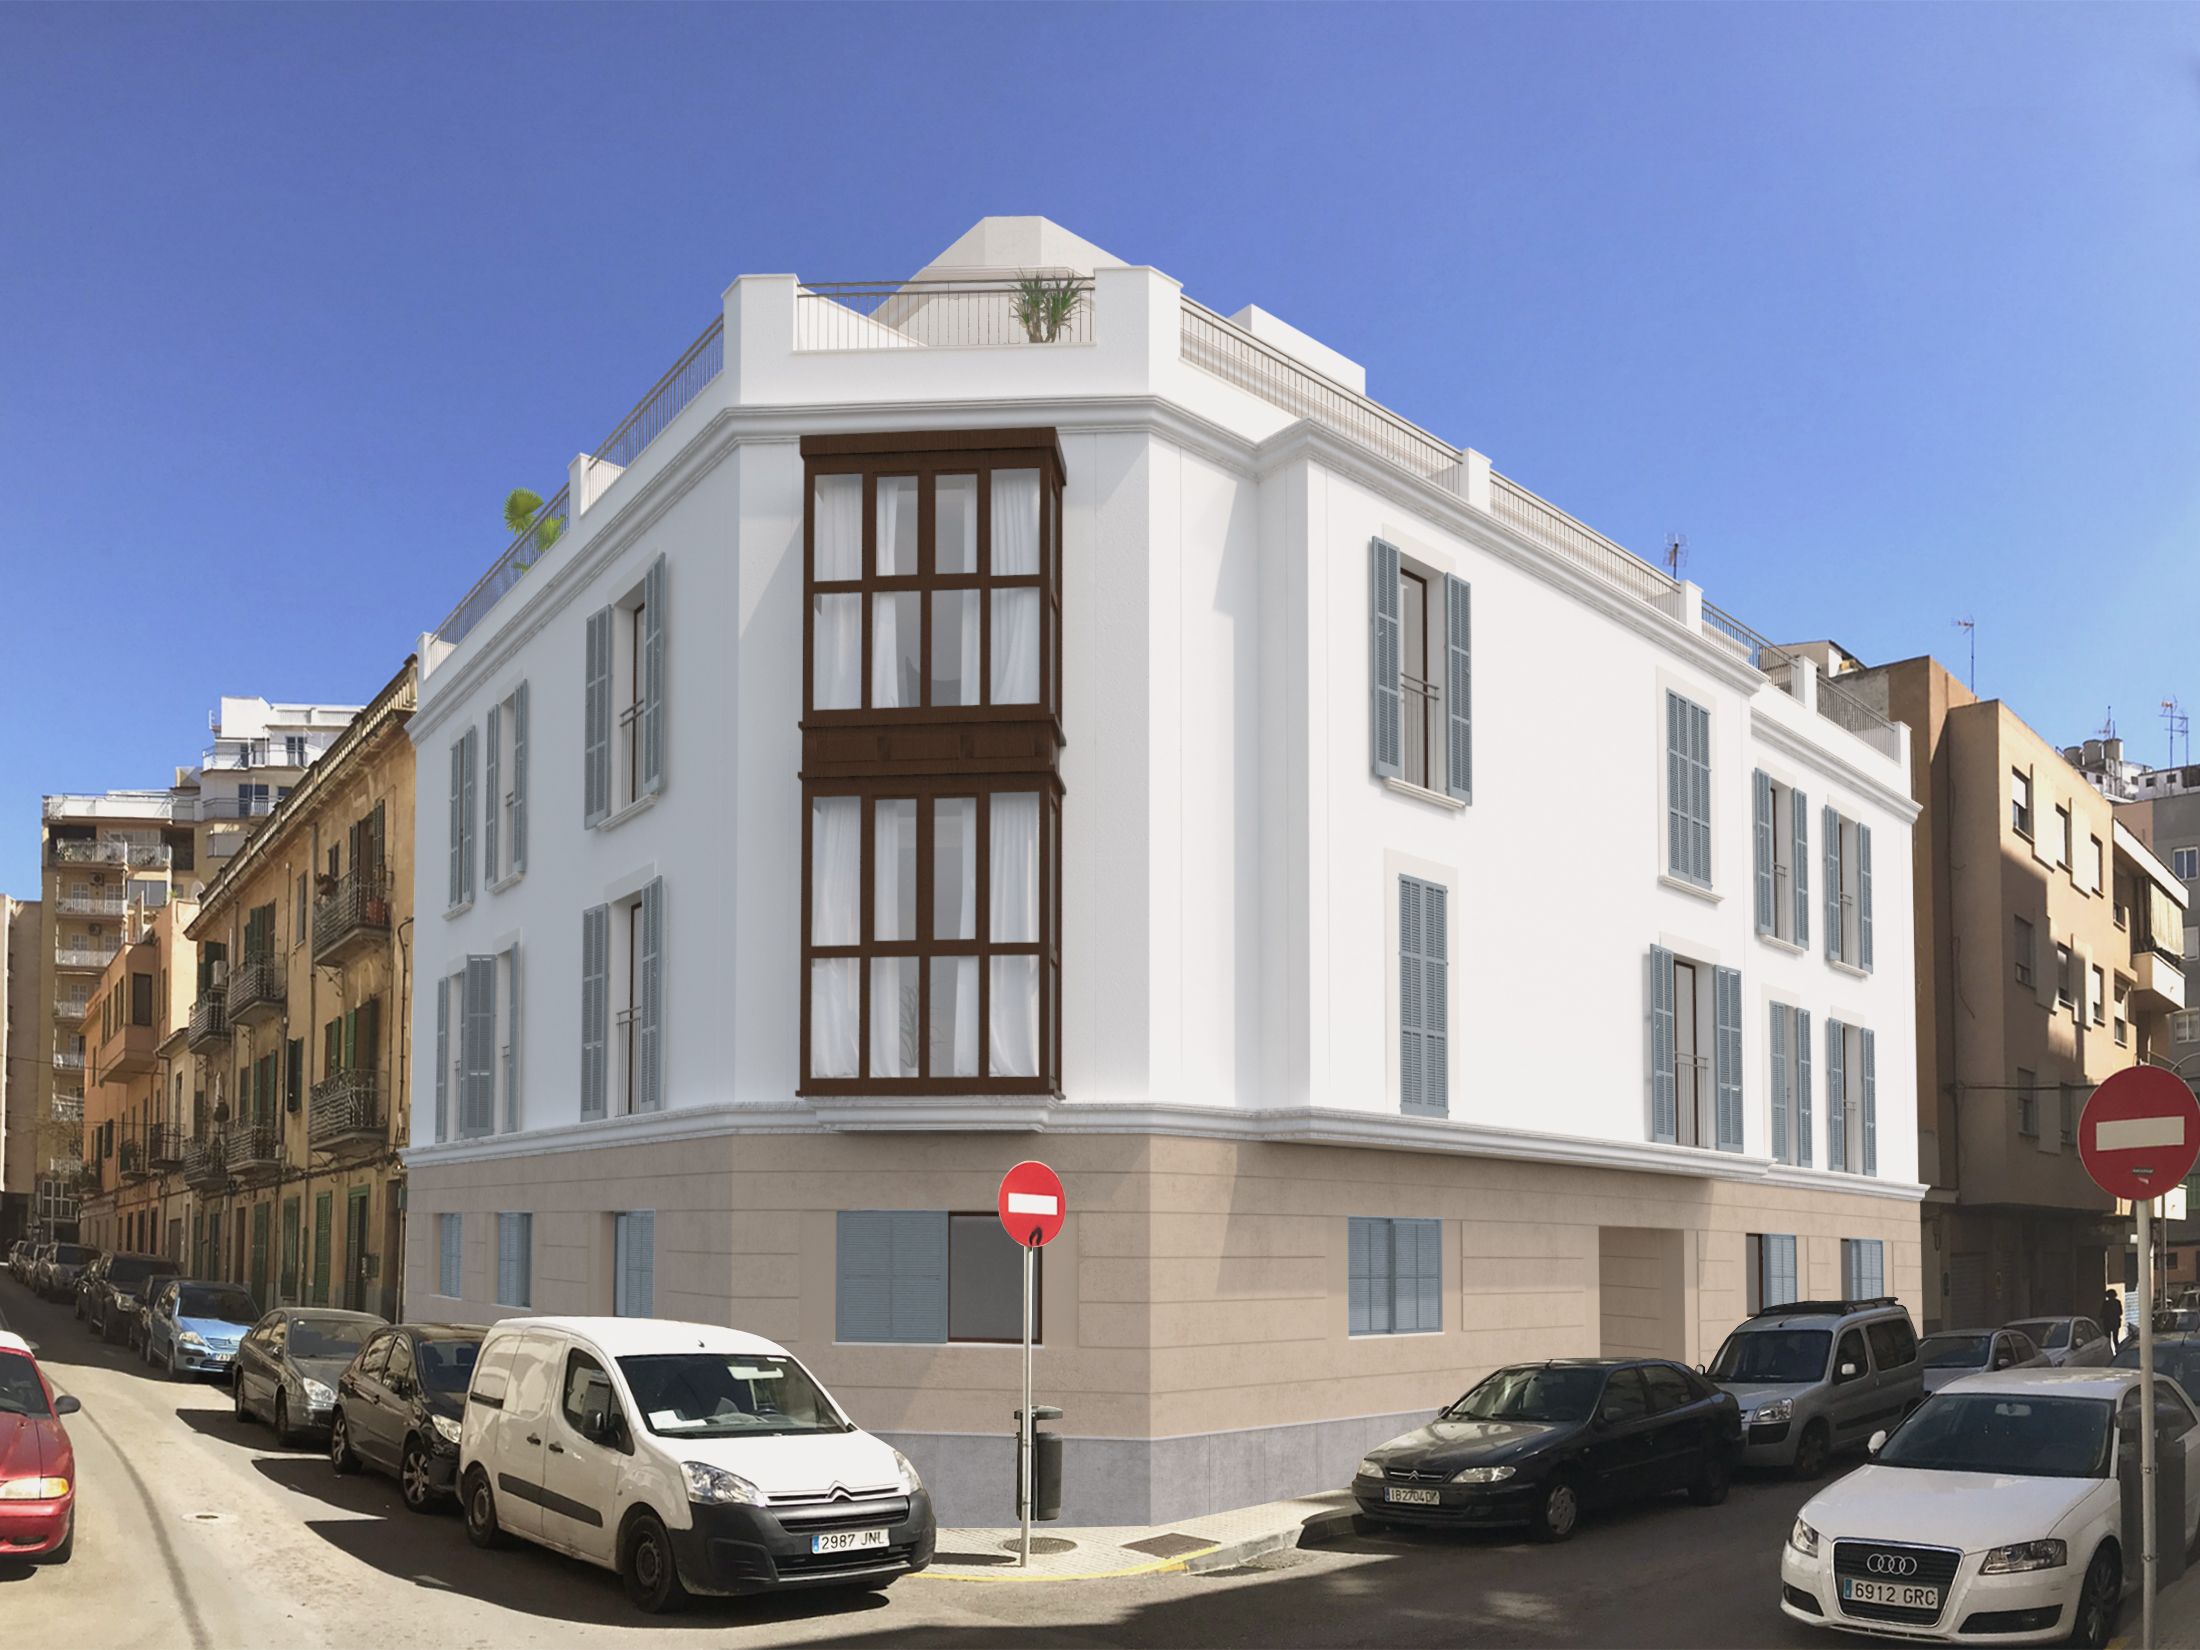 neues Wohngebäude in Palma de Mallorca